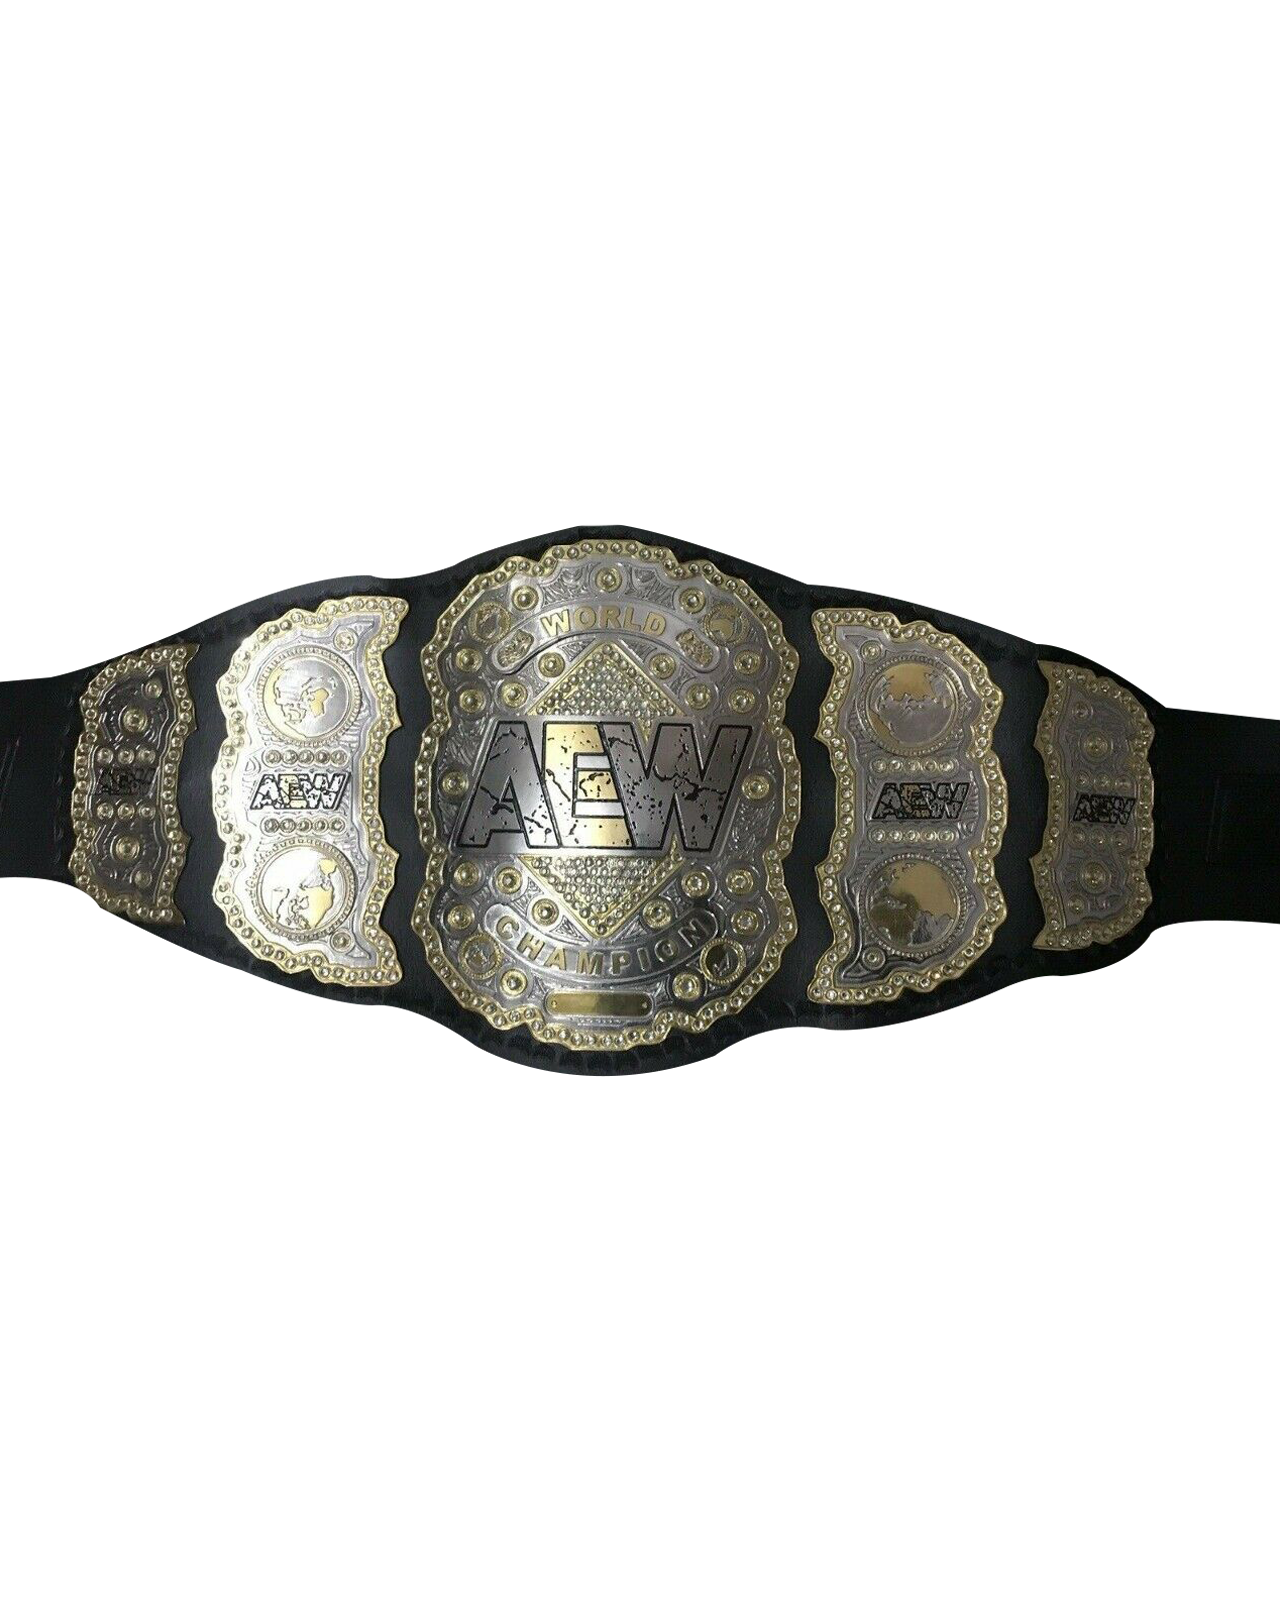 AEW World Heavyweight Wrestling Championship Belt Aspire Leather